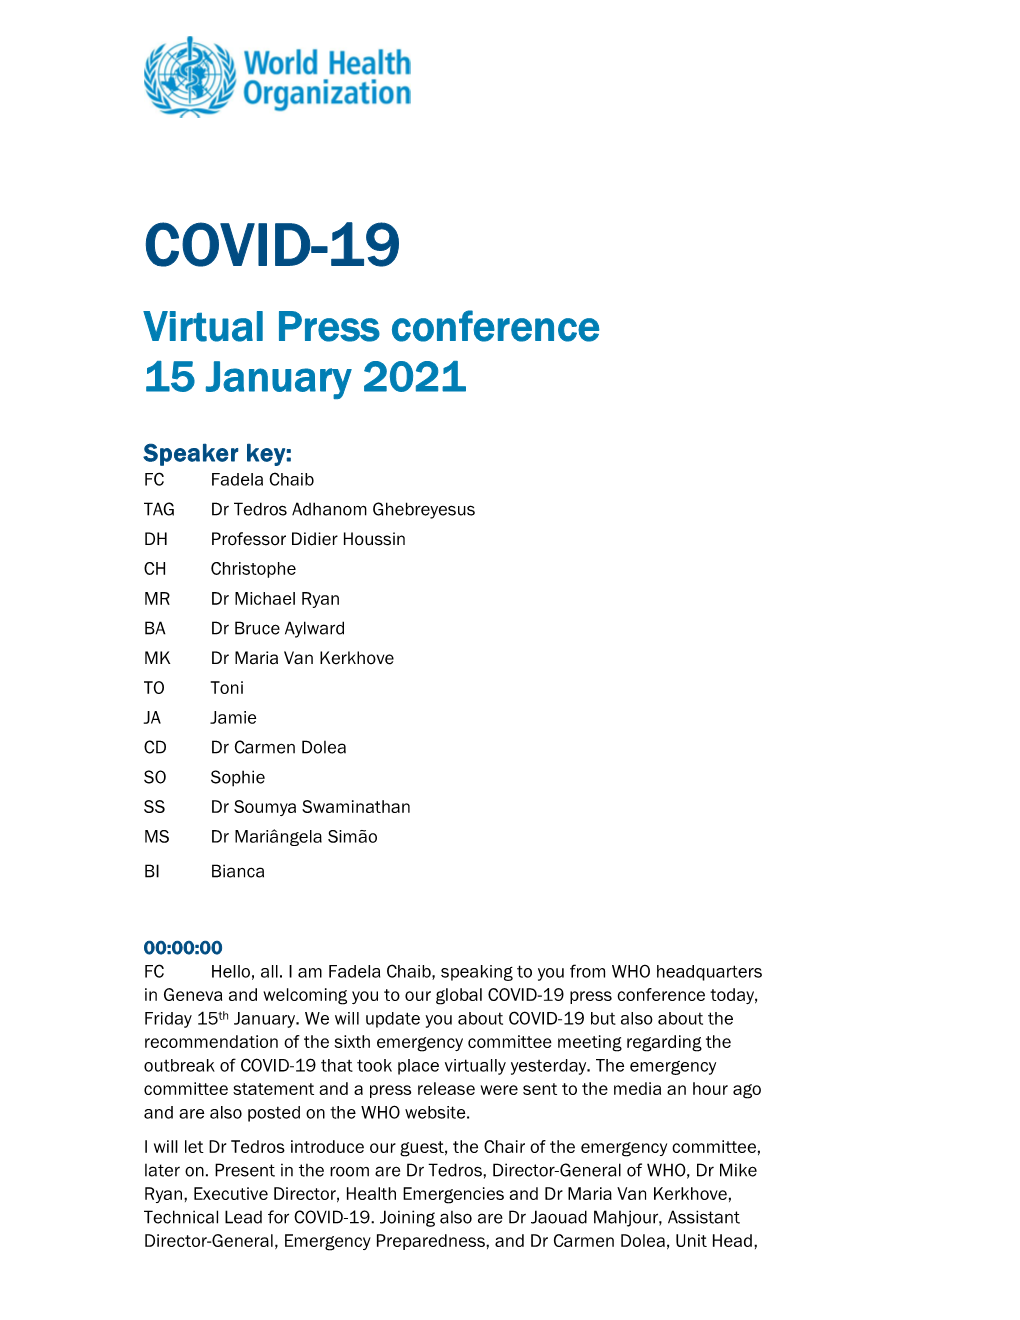 COVID-19 Virtual Press Conference 15 January 2021